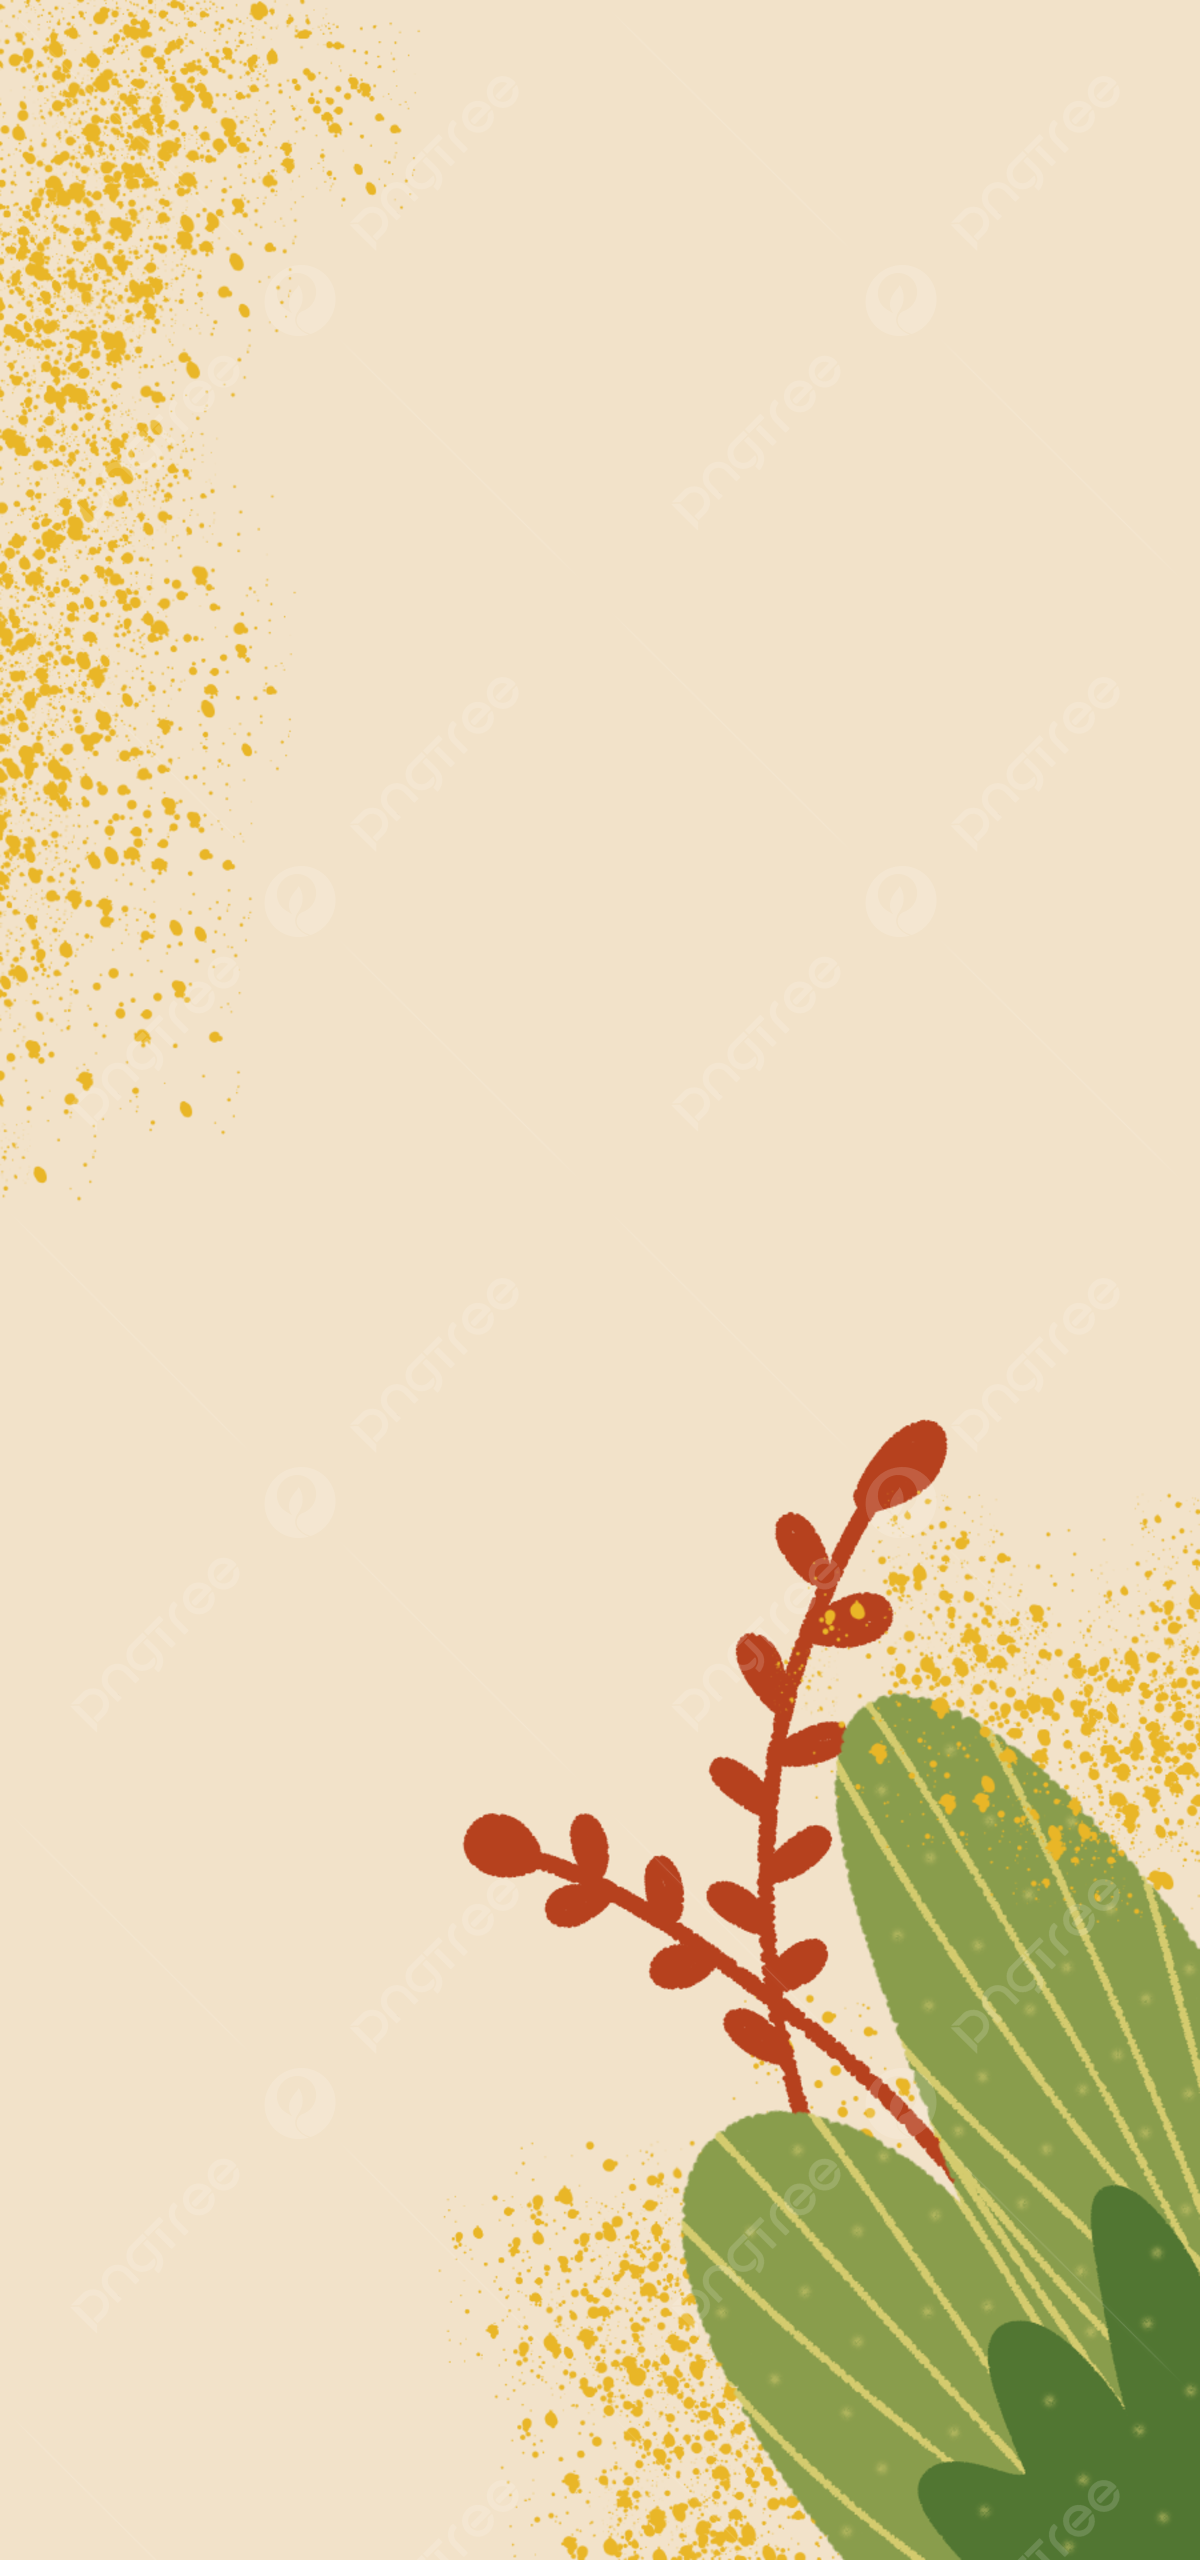 Minimalist Landscape Phone Wallpaper Hd Background Wallpaper Image For Free  Download - Pngtree